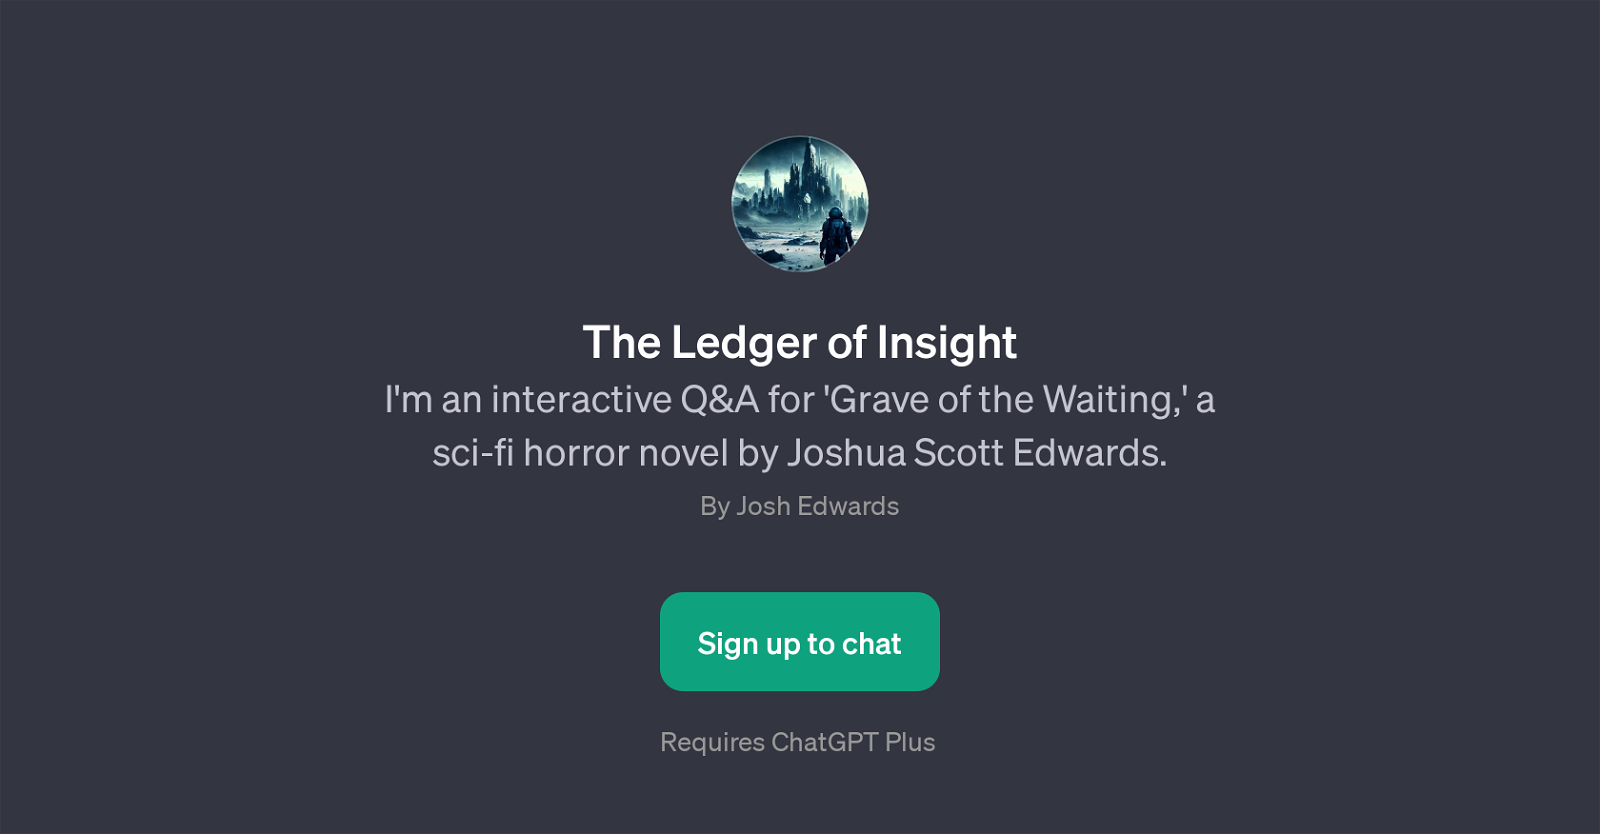 The Ledger of Insight website